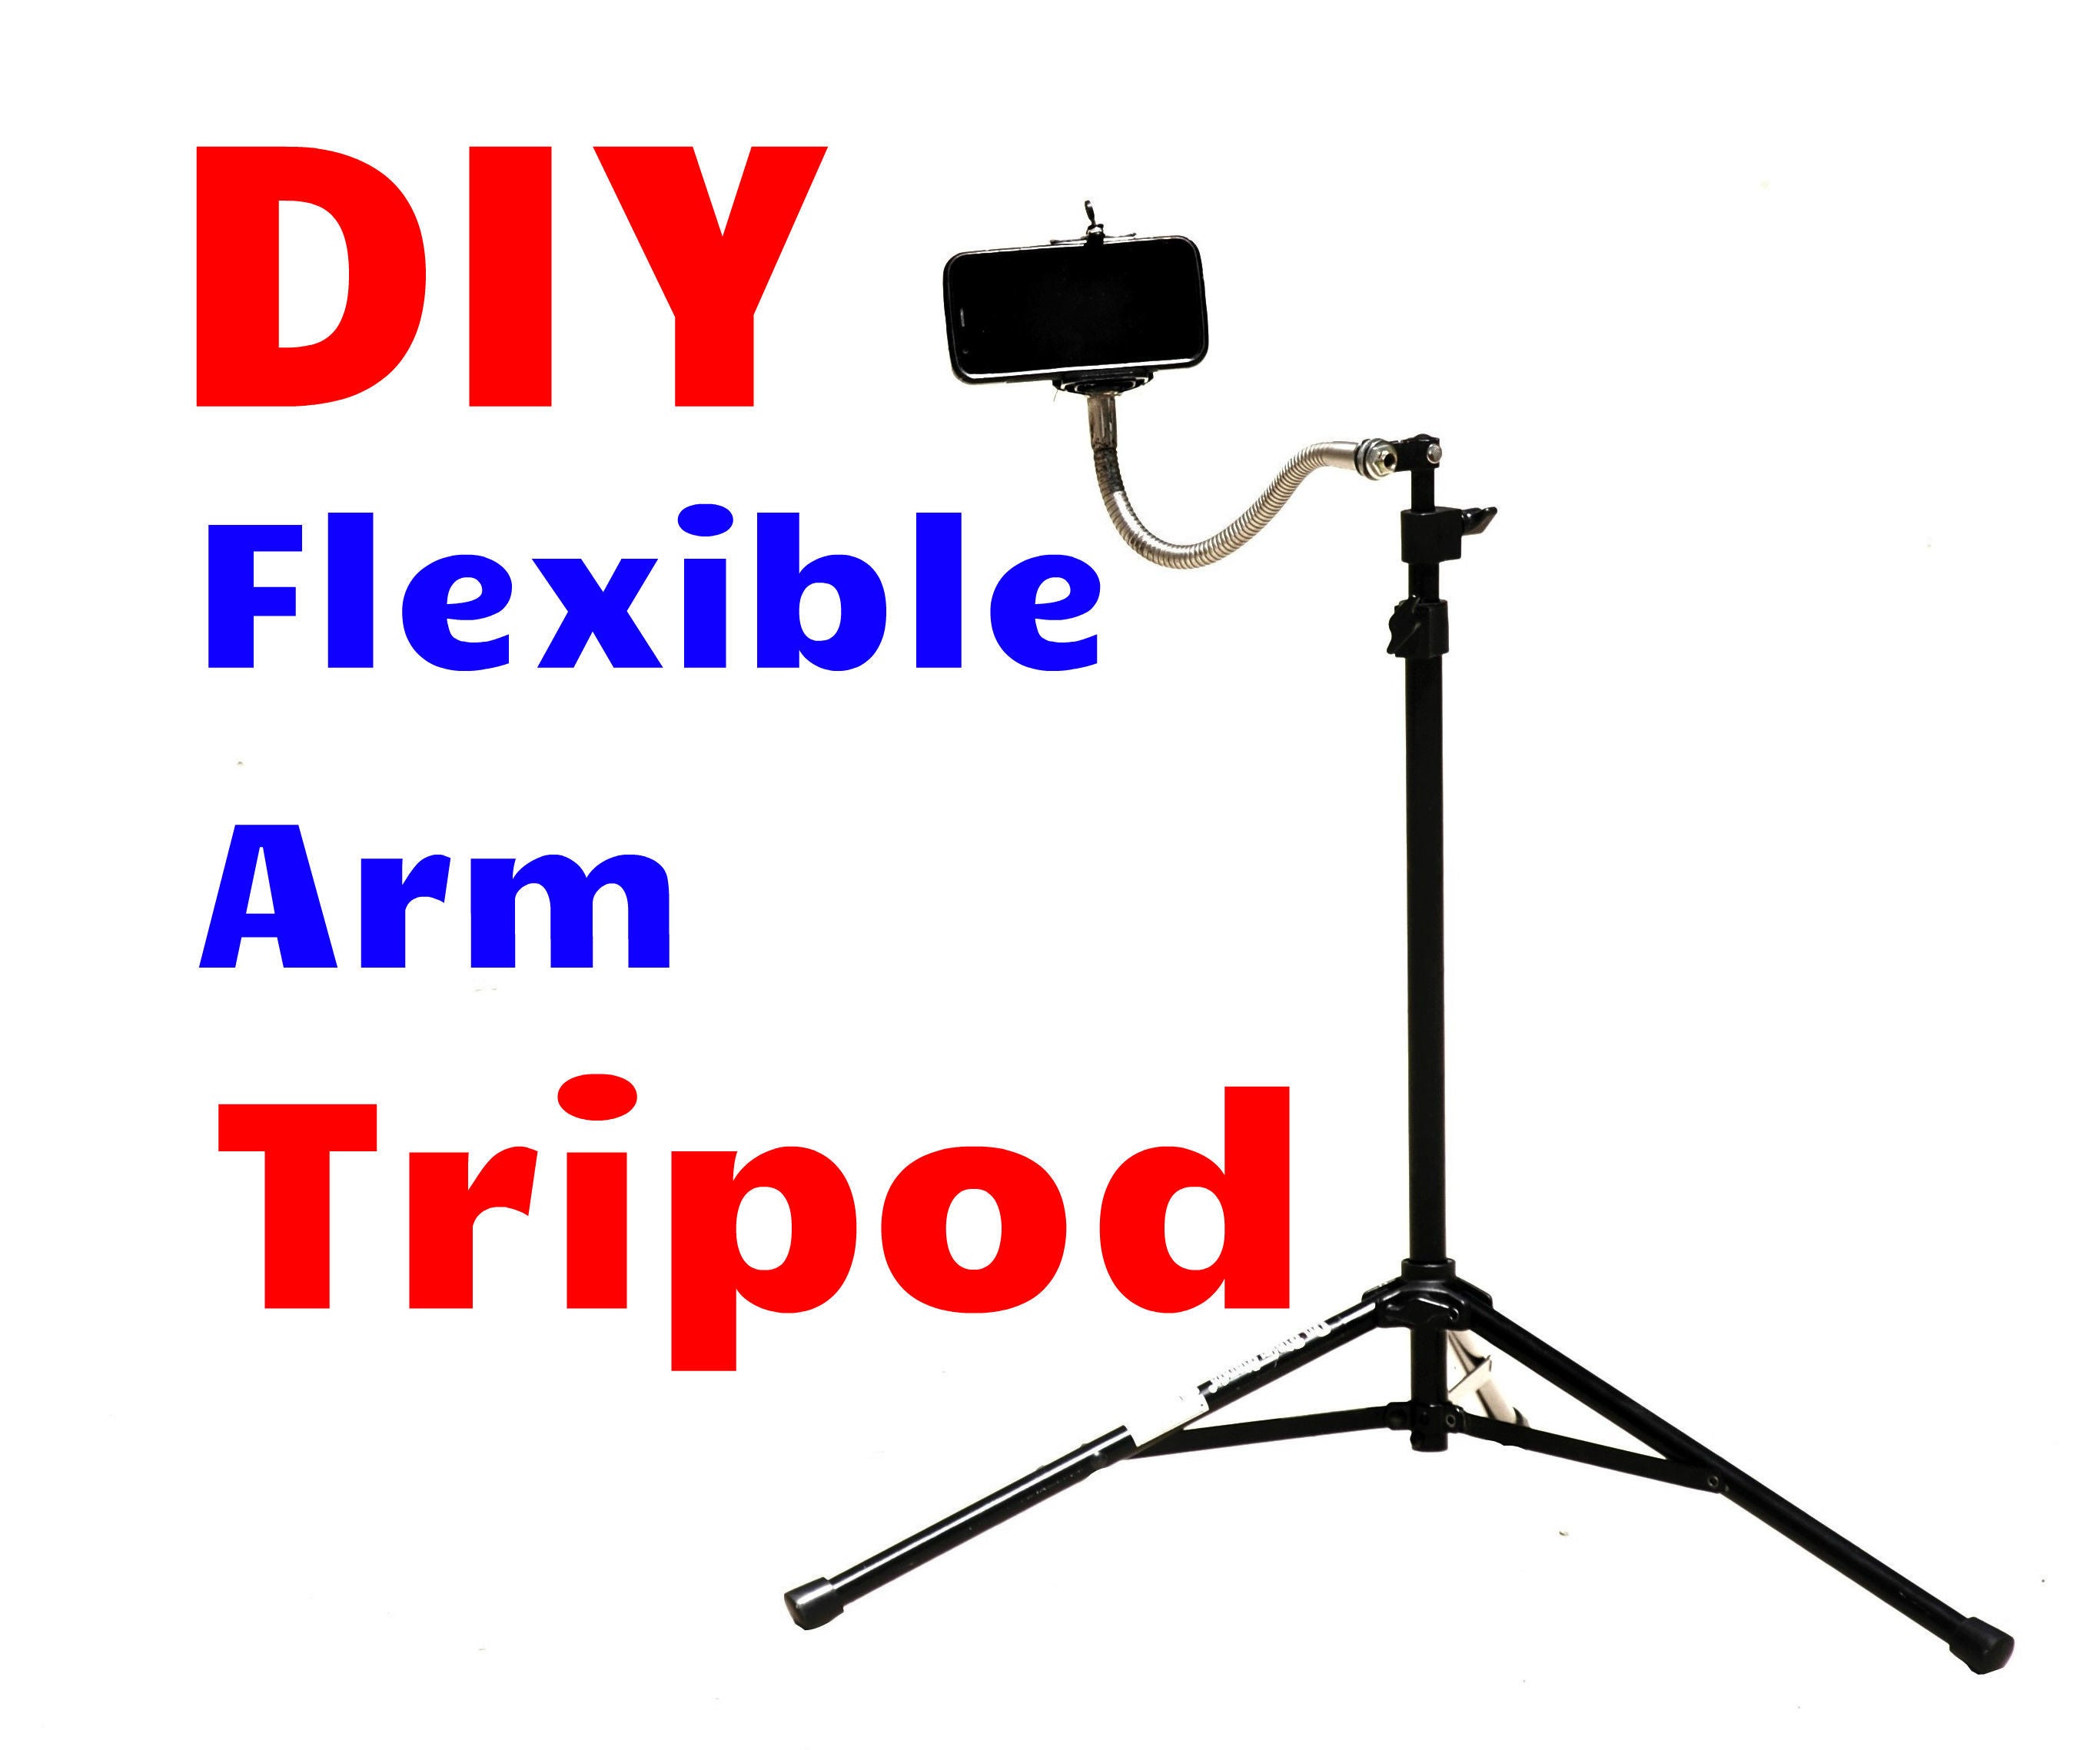 IKEA Hack: DIY Flexible Arm Tripod!